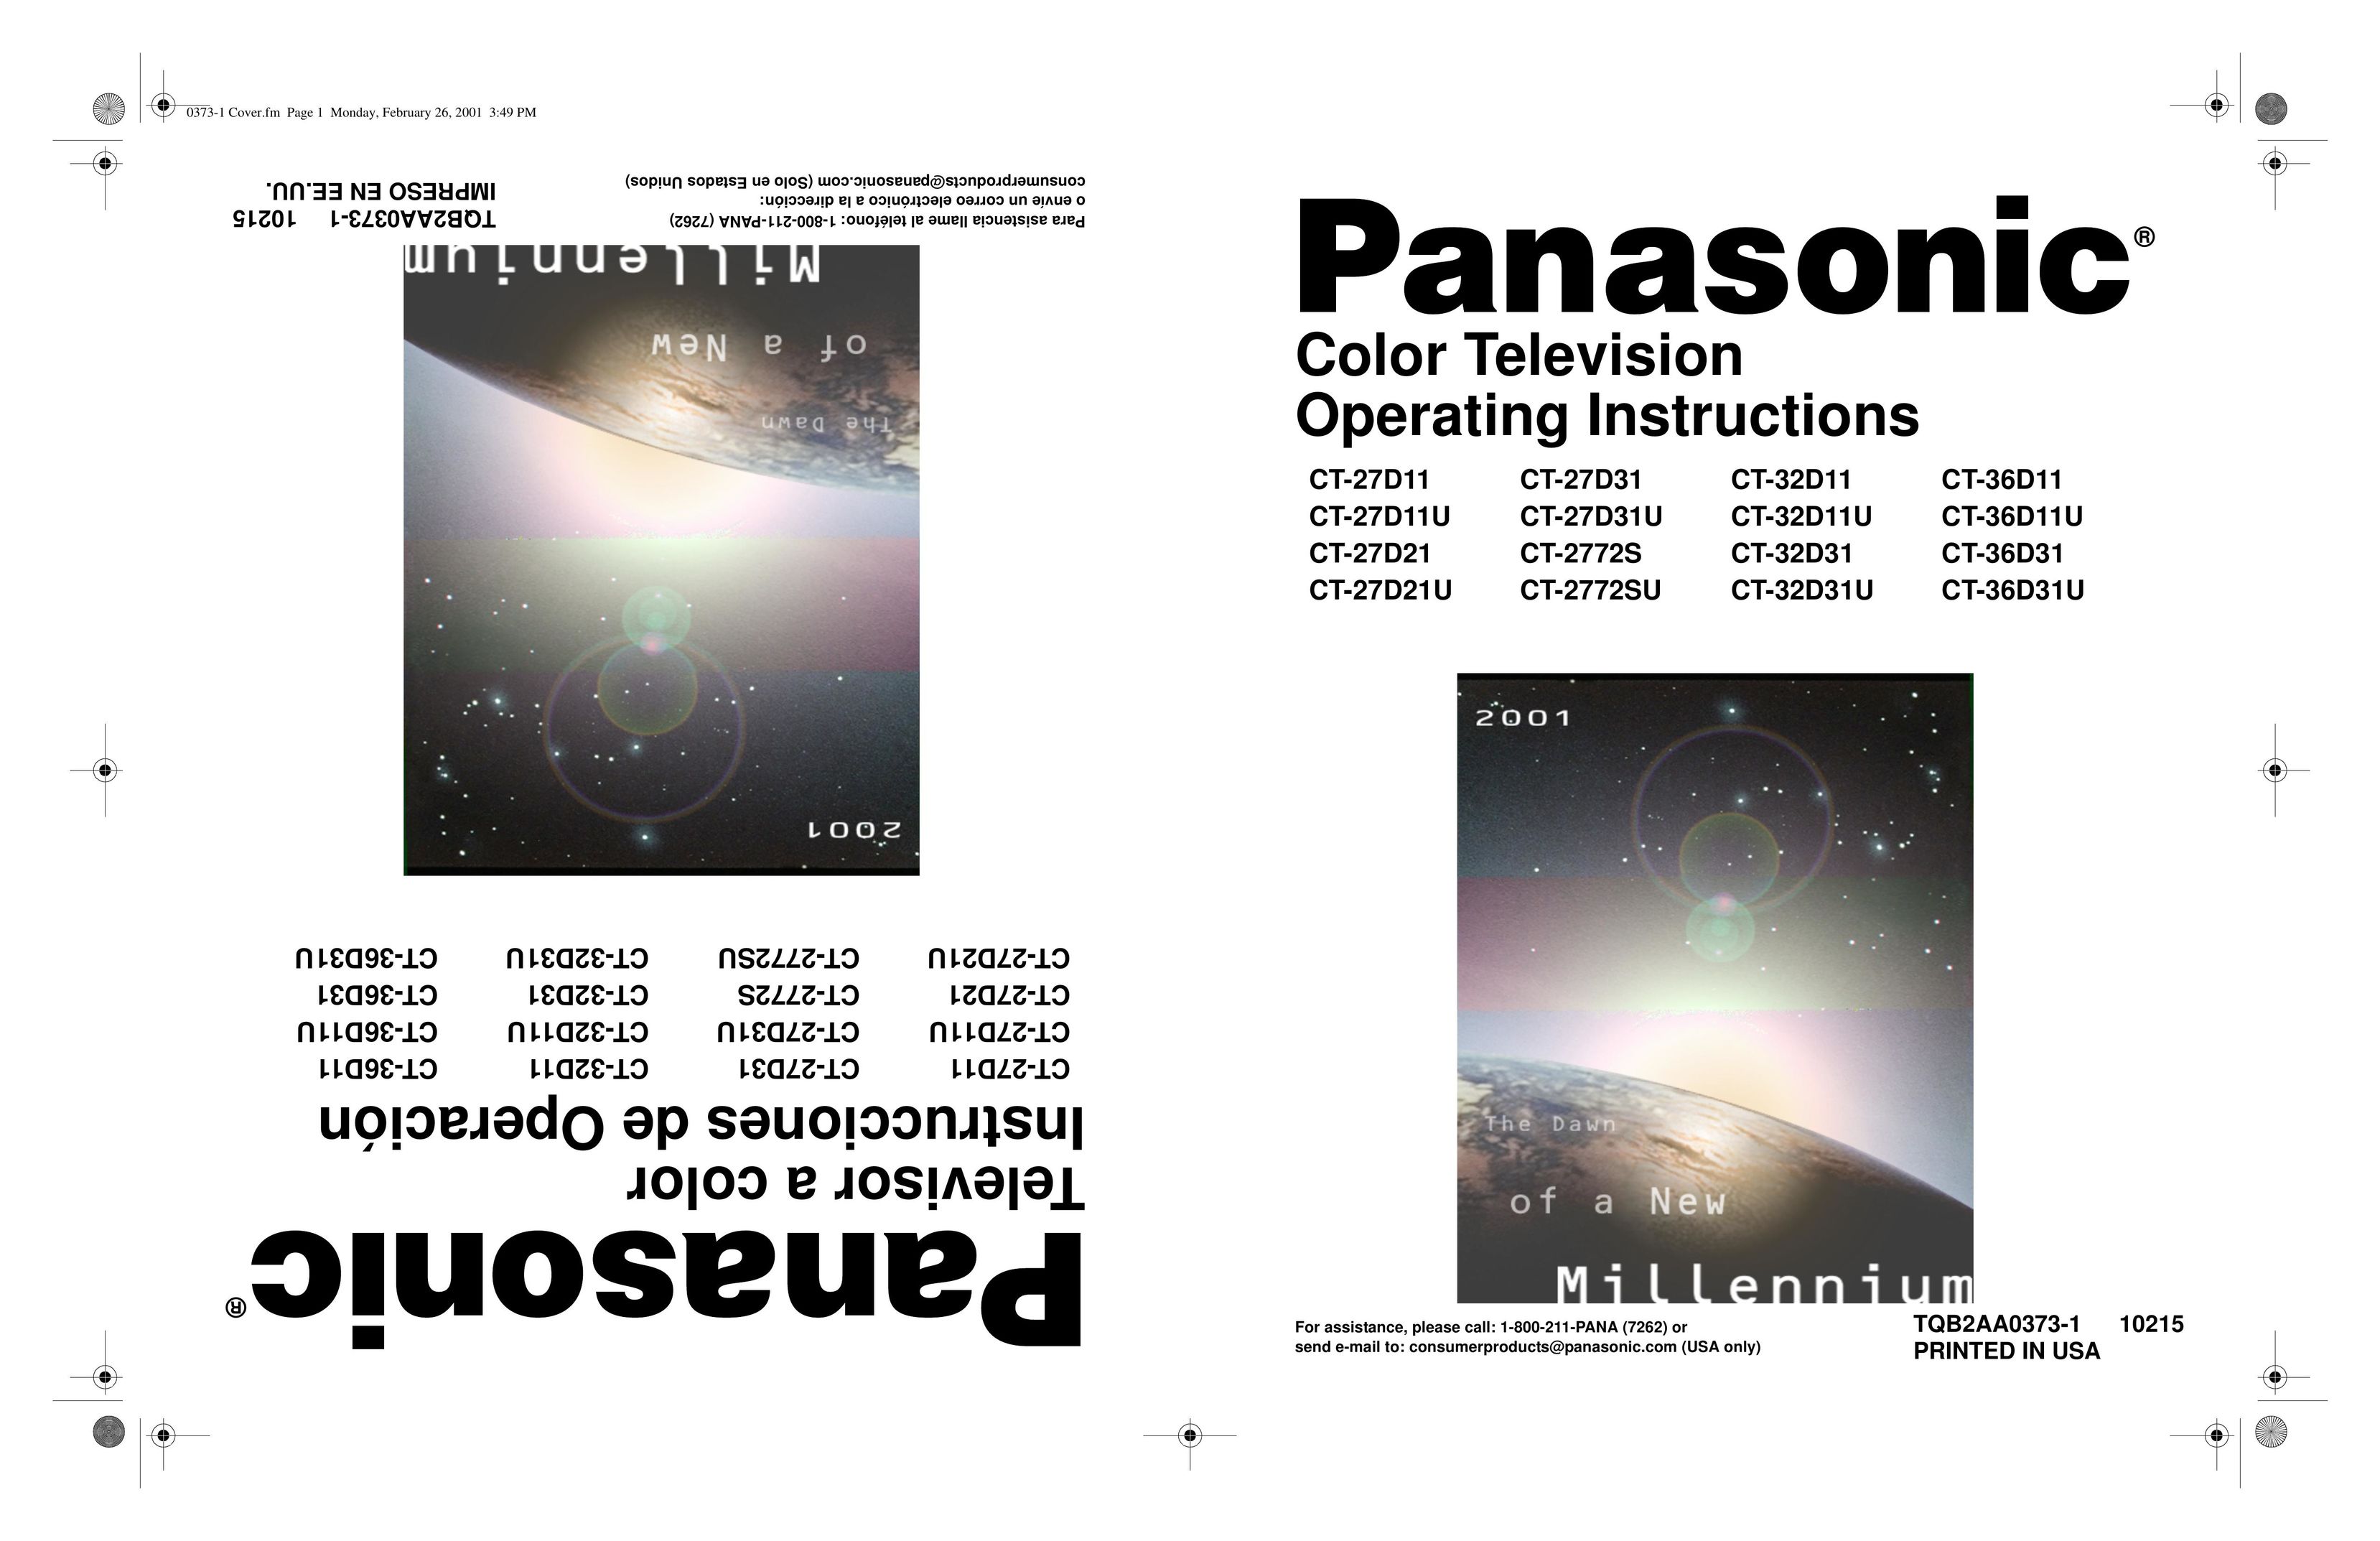 Panasonic CT 32D31 CRT Television User Manual